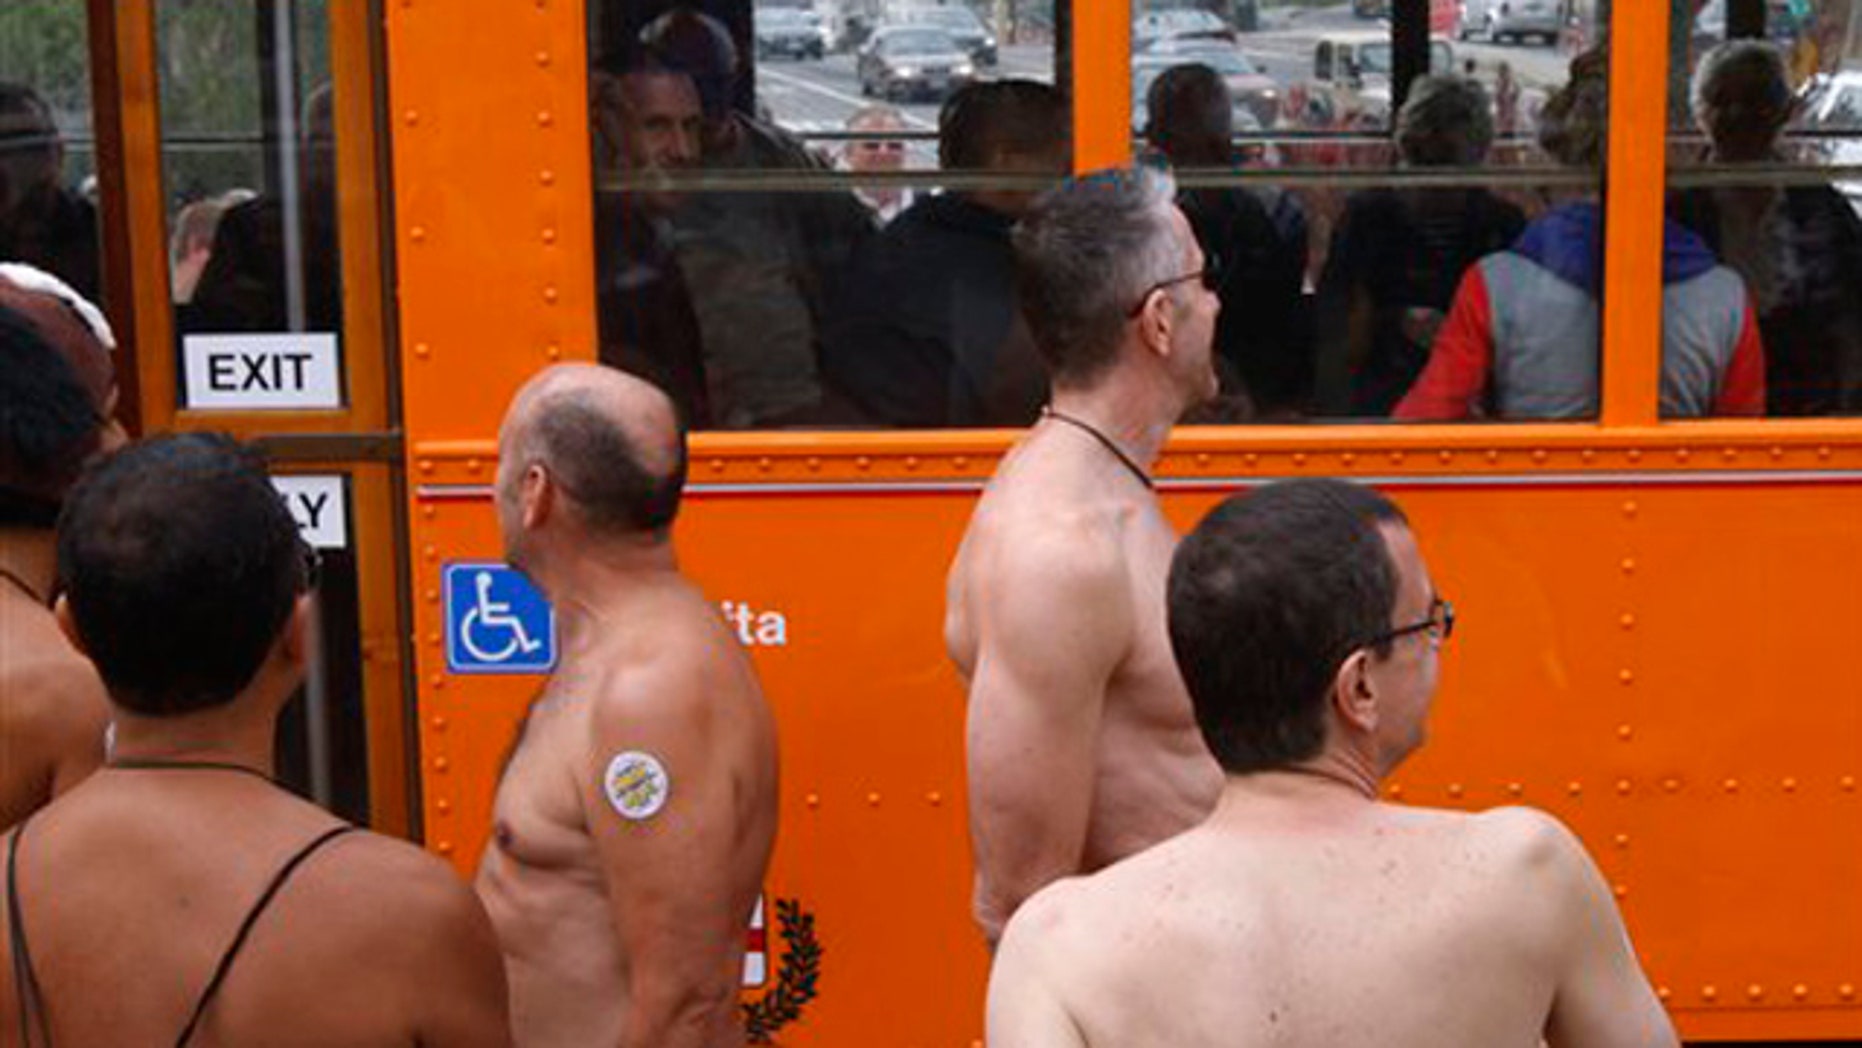 folsom street fair public gay sex